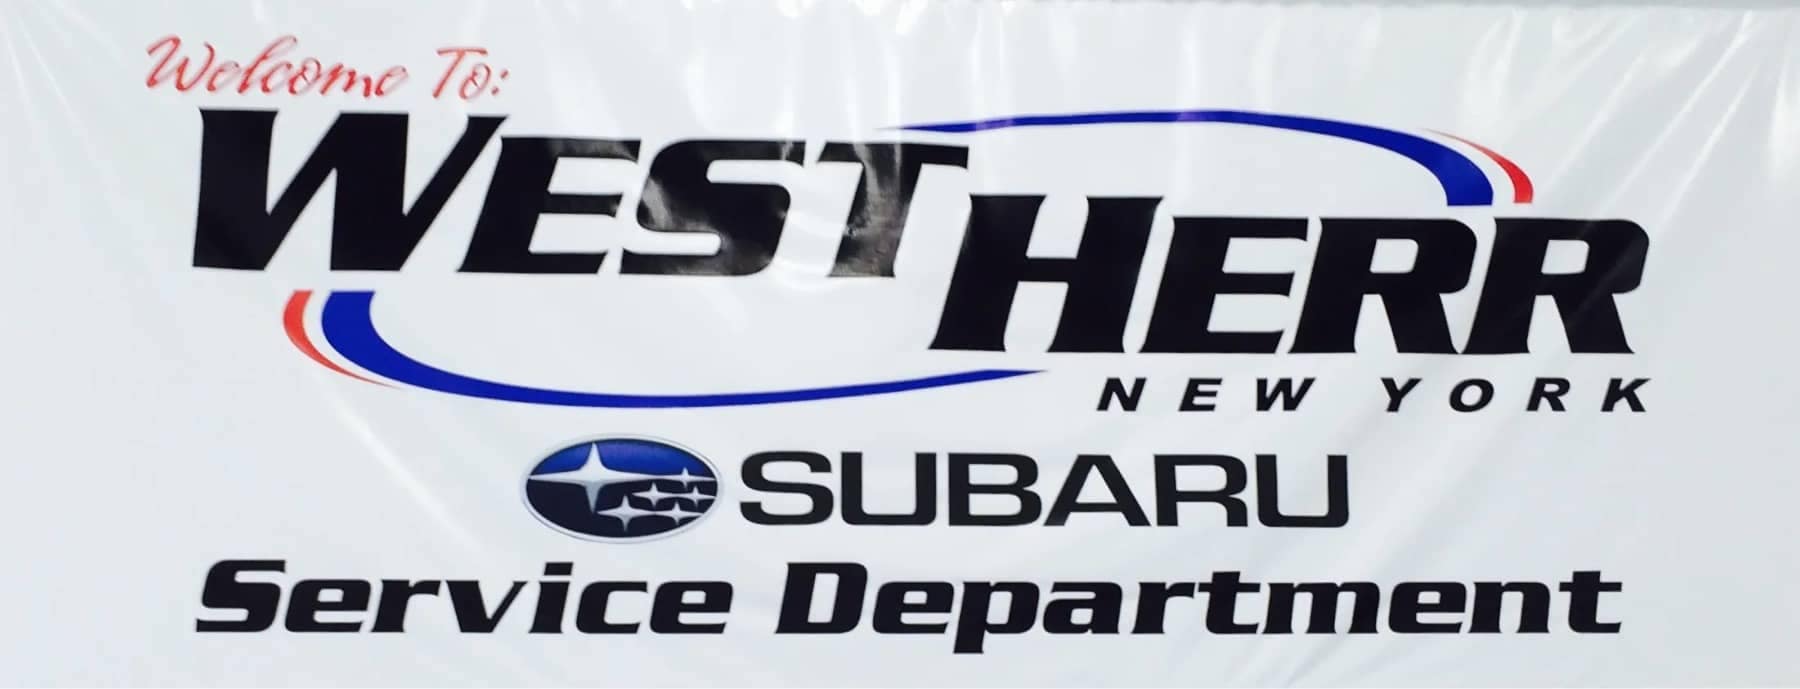 West Herr Subaru Service Dept